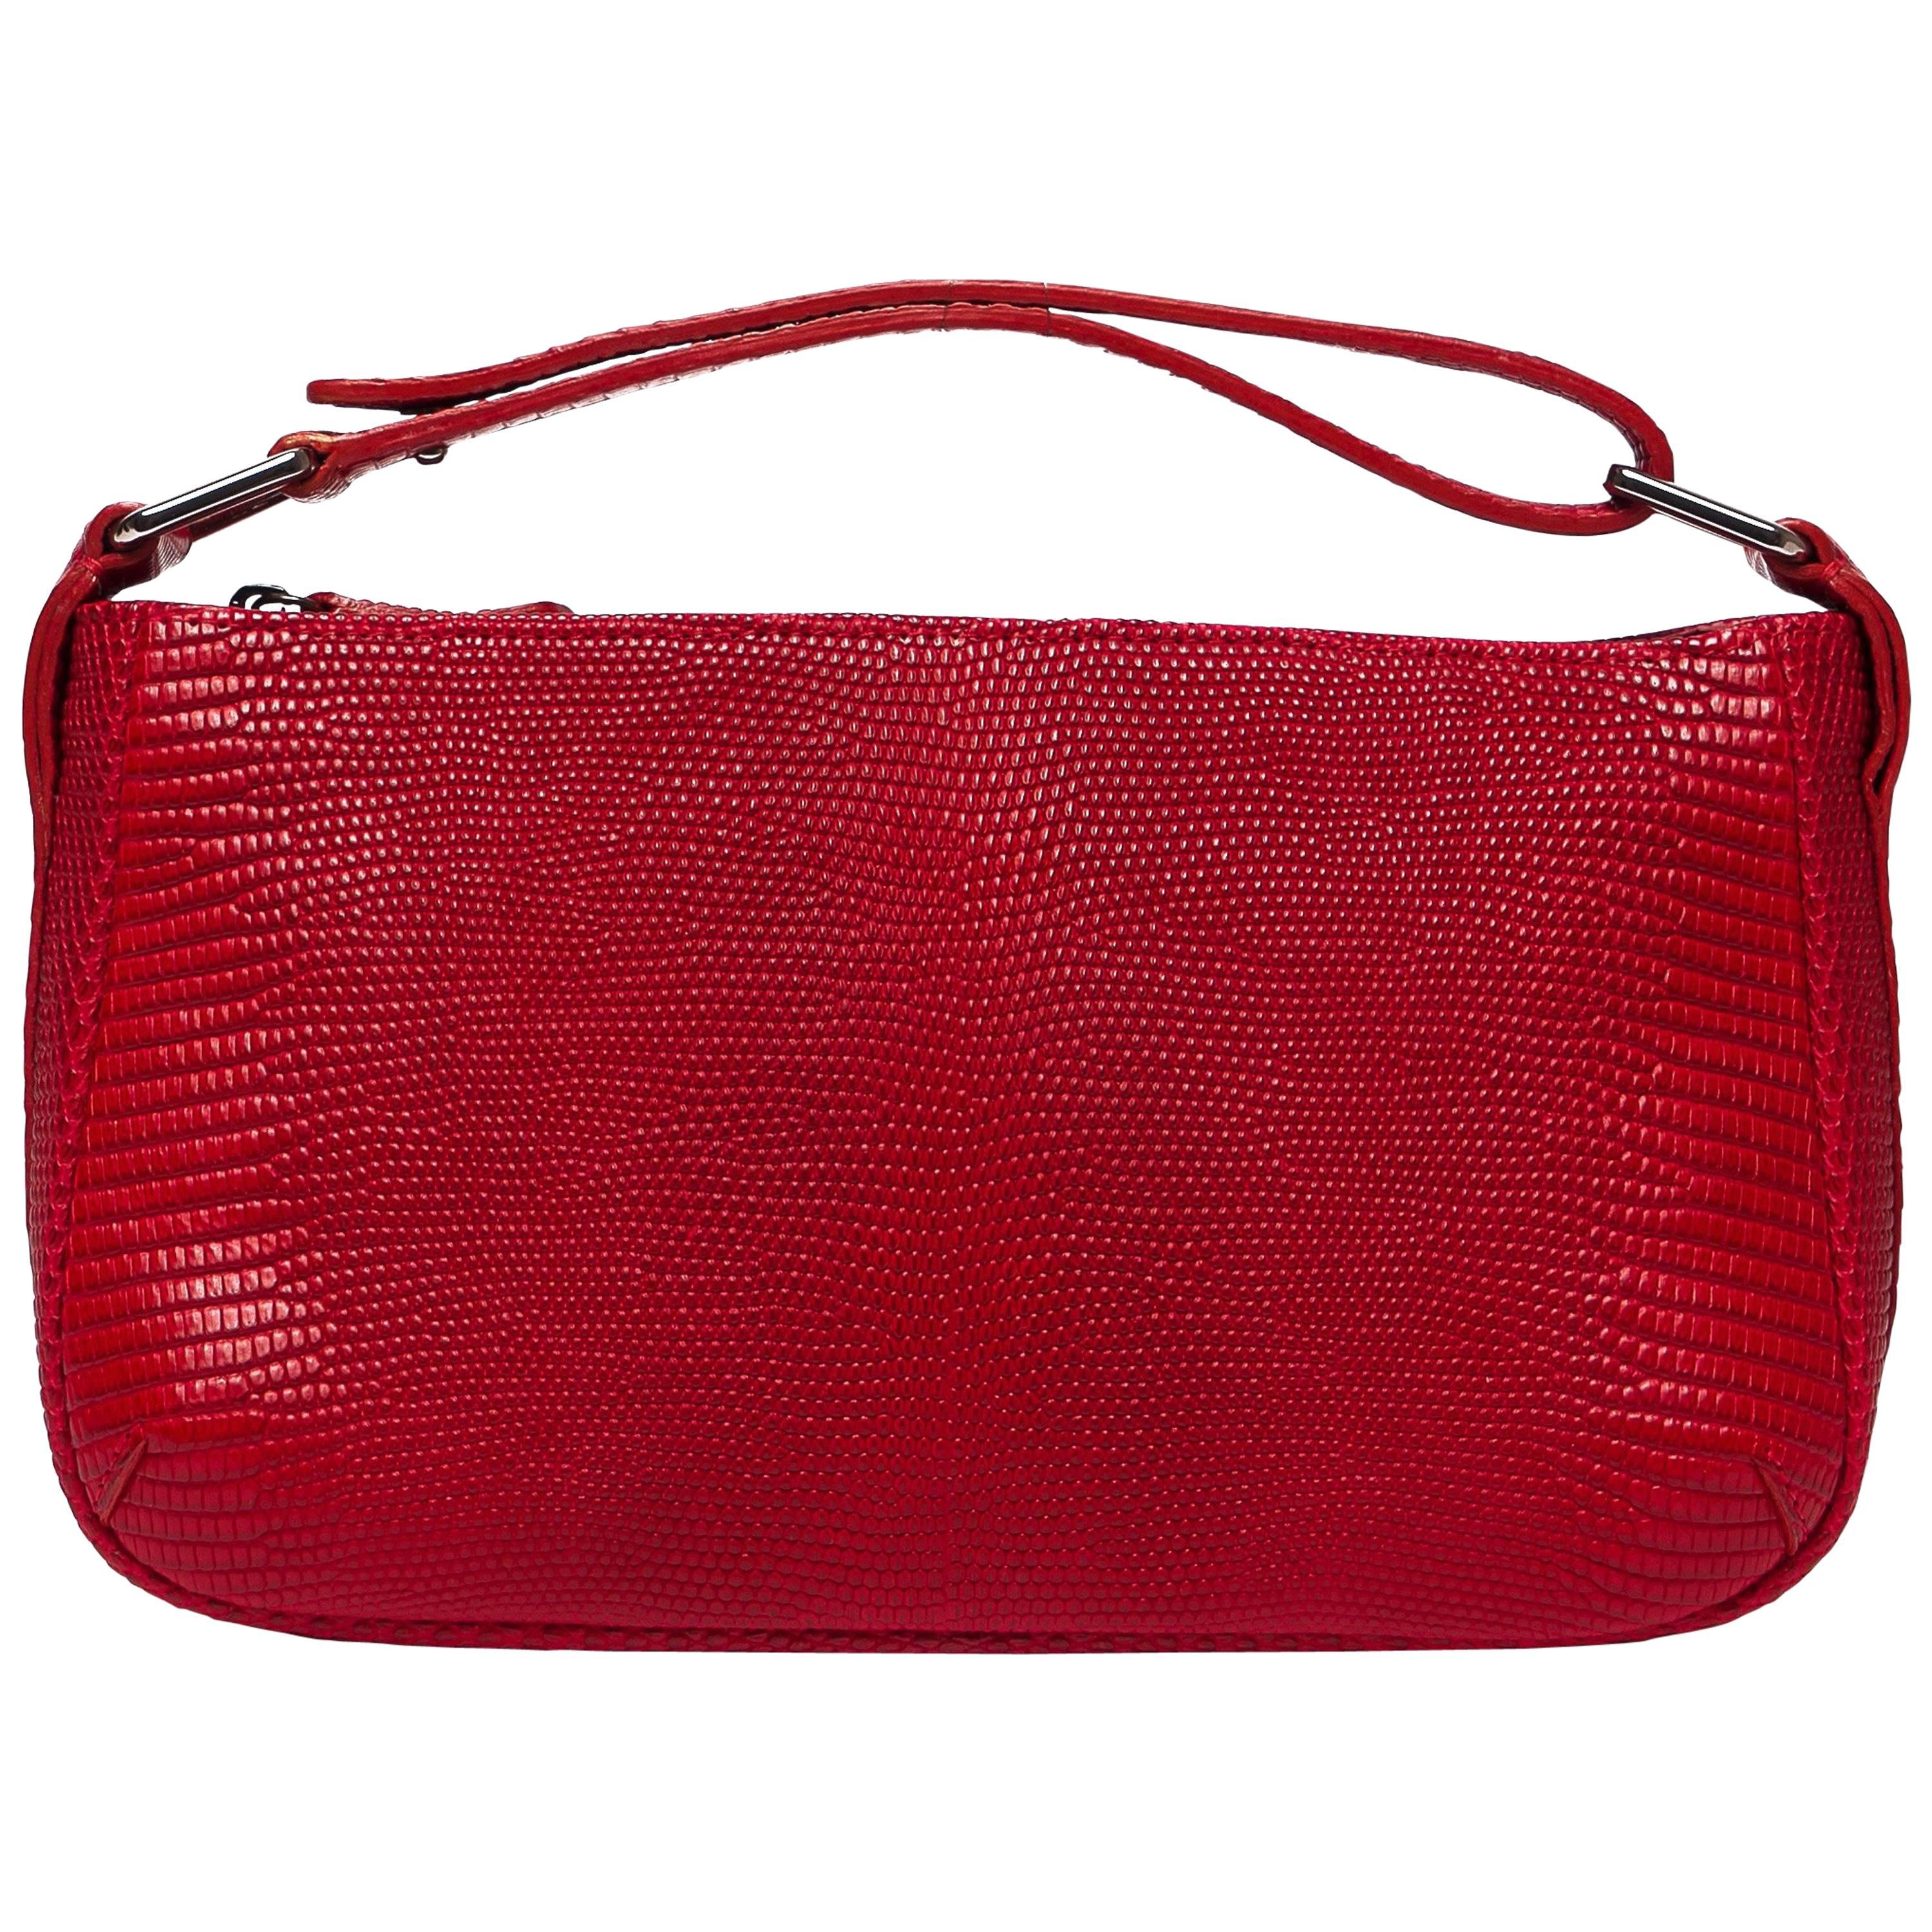 Lynn Baguette Red Lizard Leather Handbag For Sale